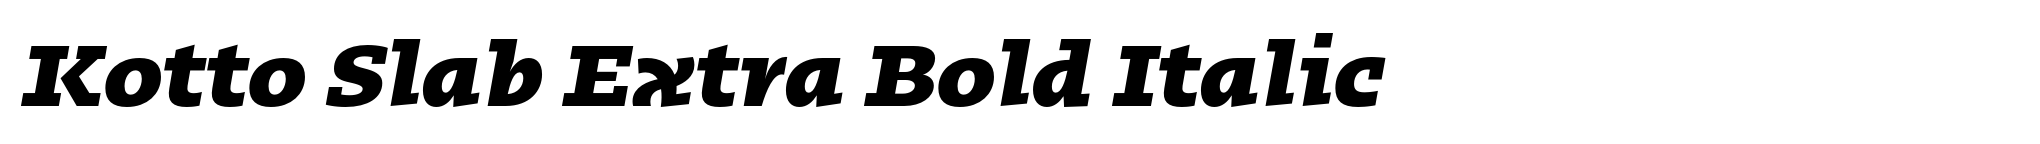 Kotto Slab Extra Bold Italic image